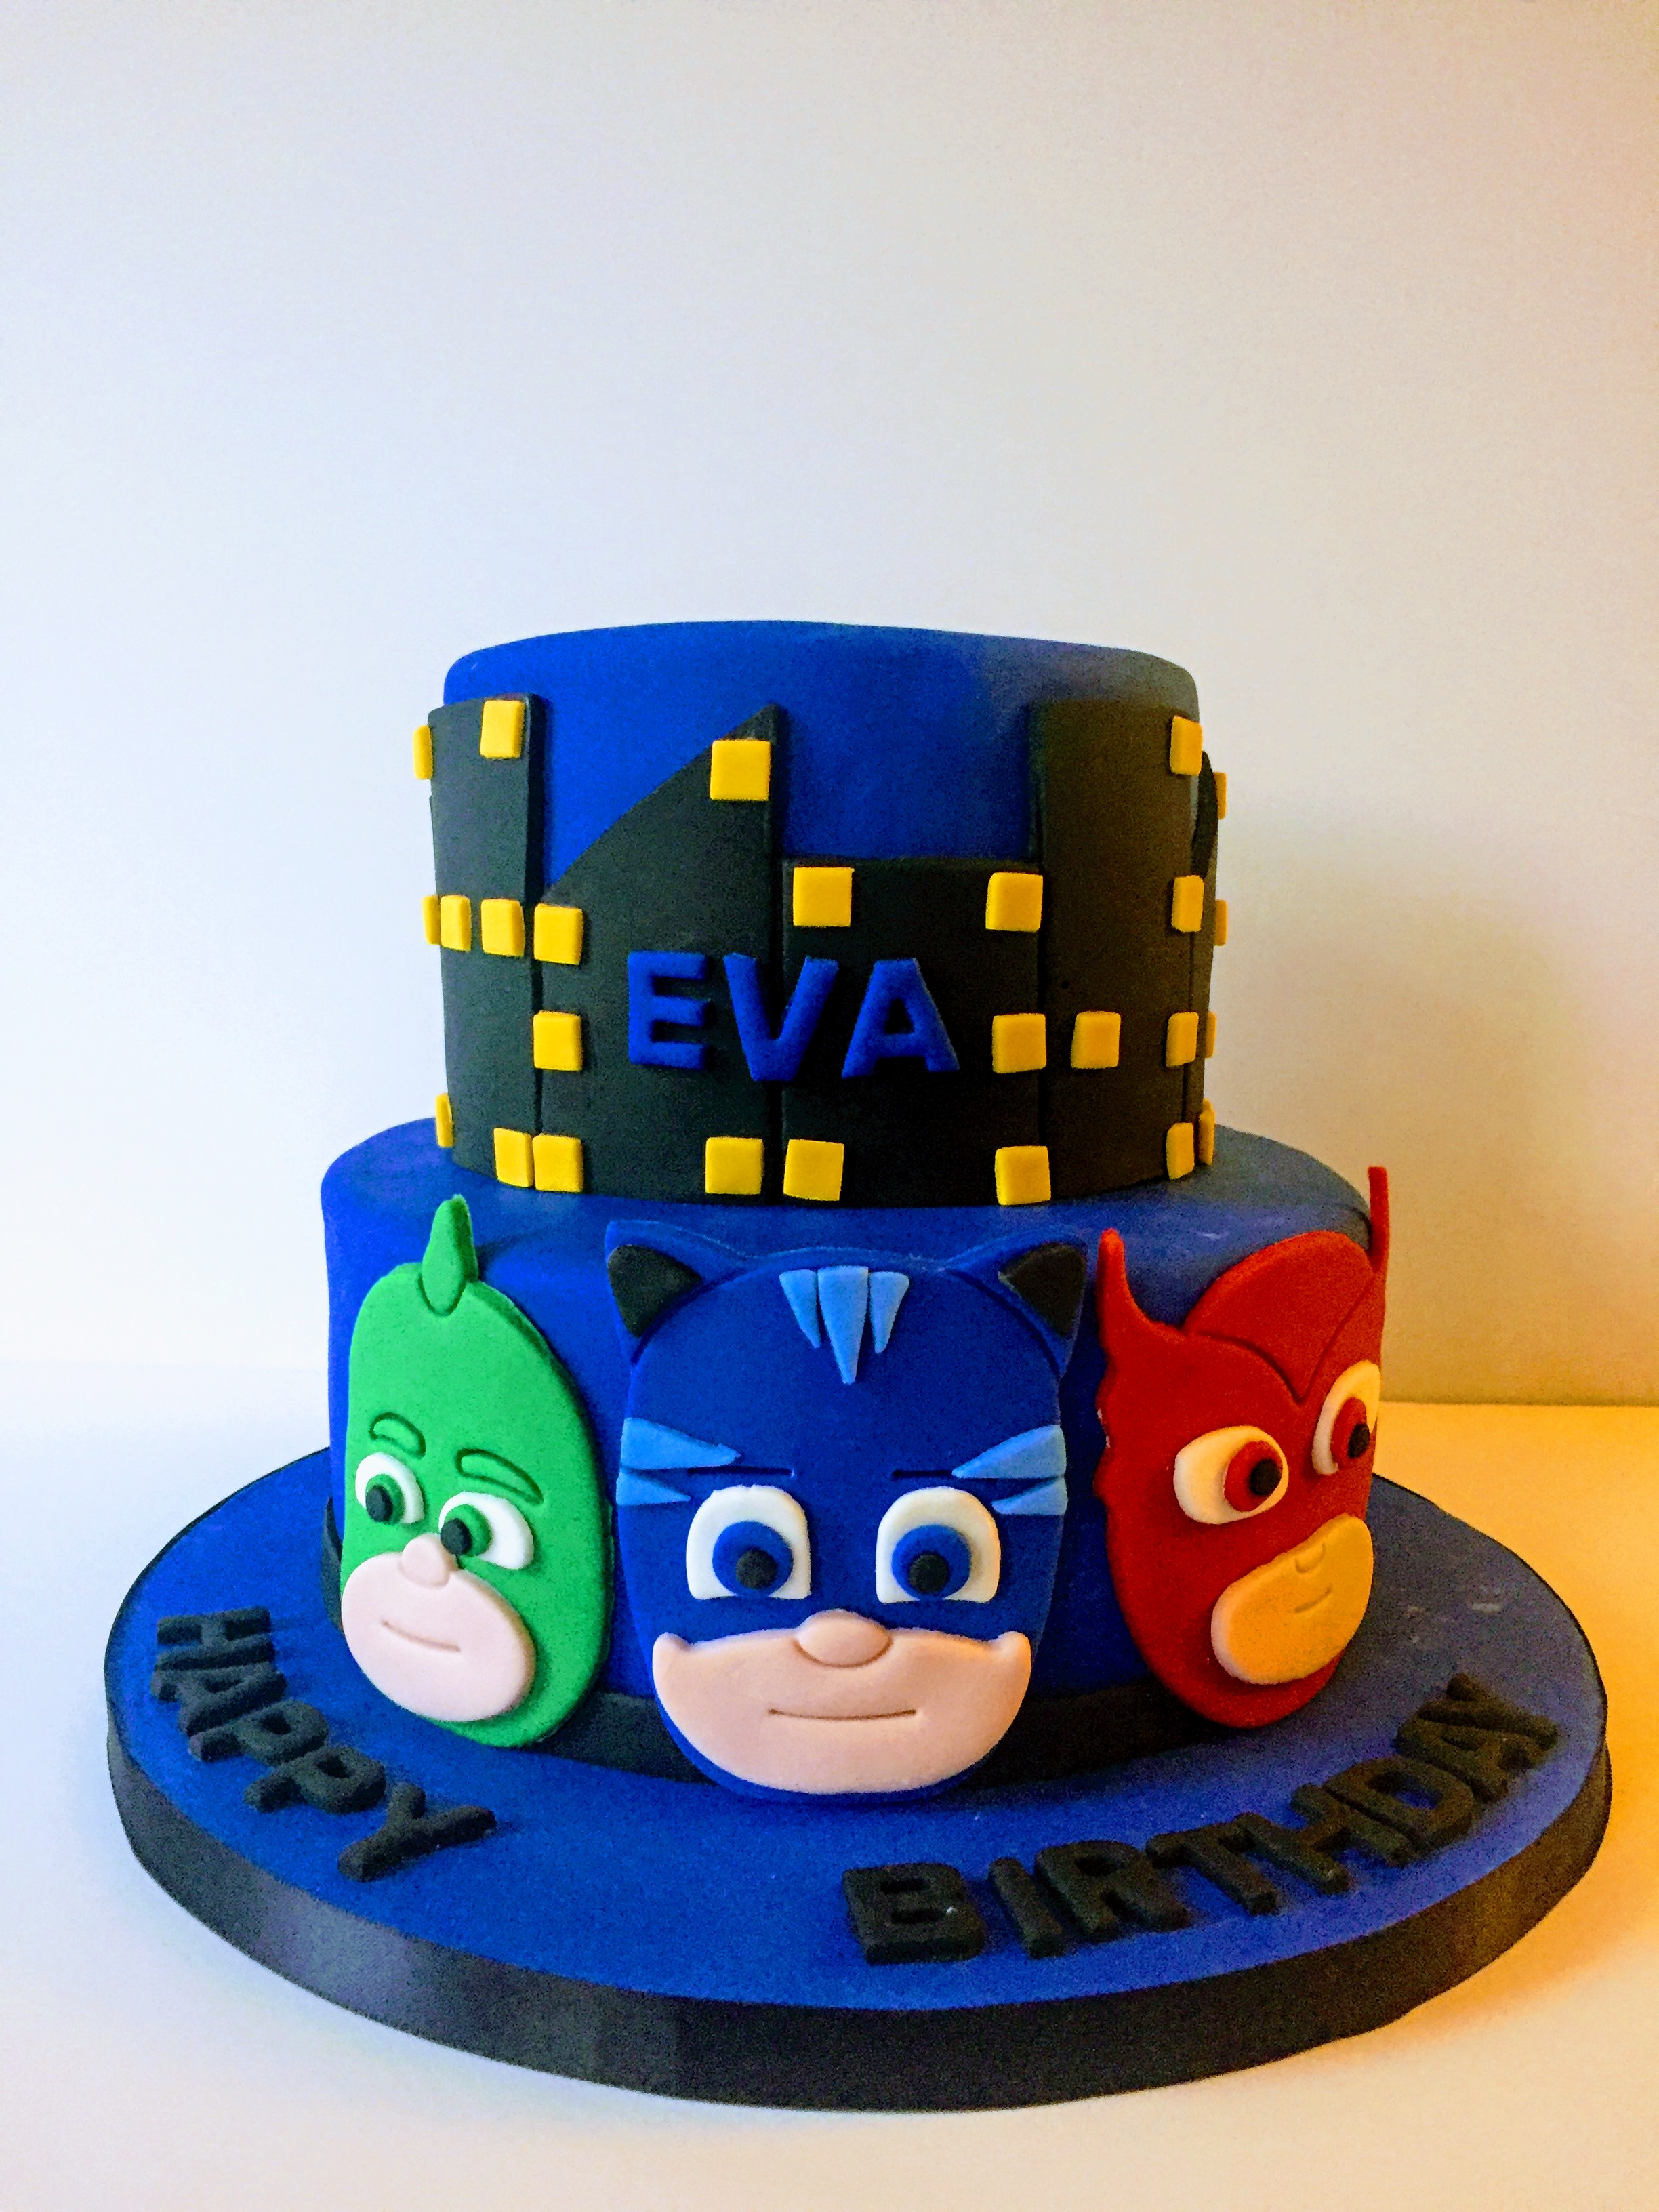 PJ Masks Cake Designs for Birthday Online | YummyCake